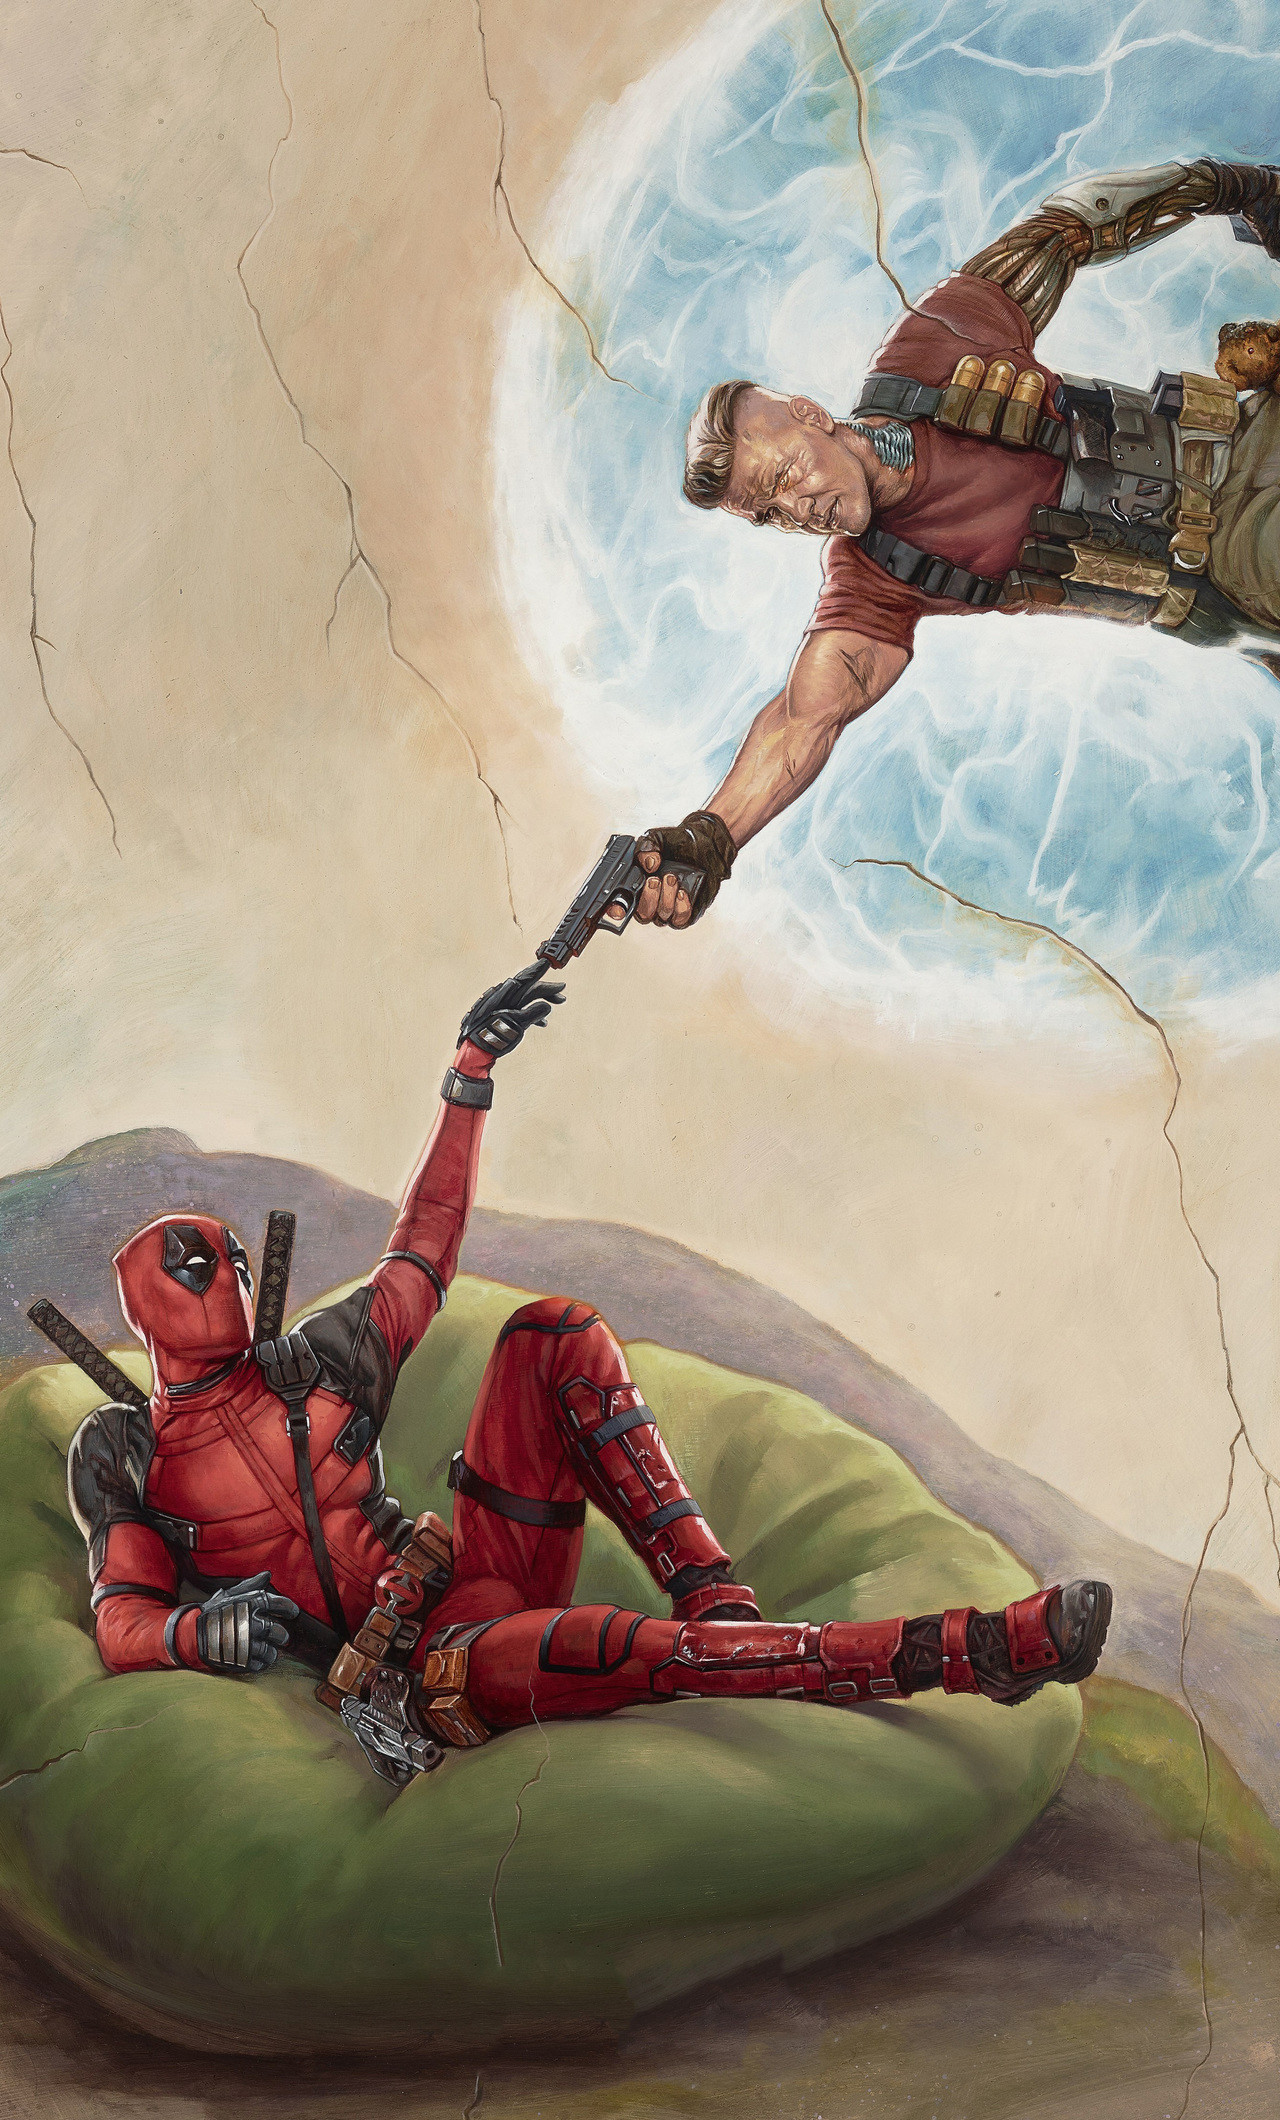 1280x2120 Deadpool 2 2018 Movie Poster (iPhone 6+)